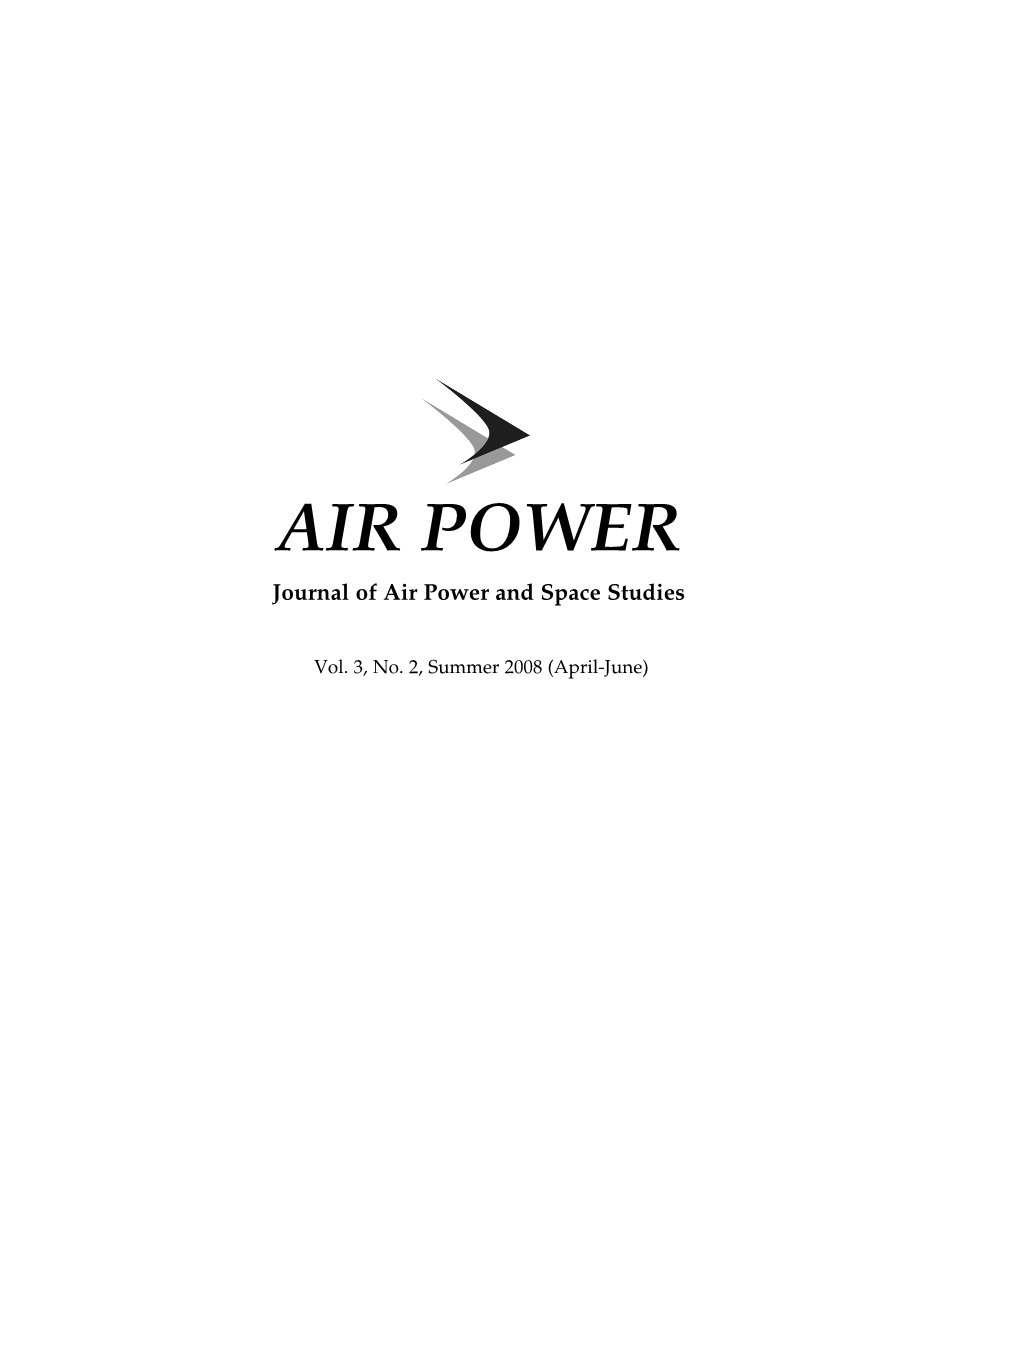 Summer 2008 (April-June) AIR POWER CENTRE for AIR POWER STUDIES New Delhi